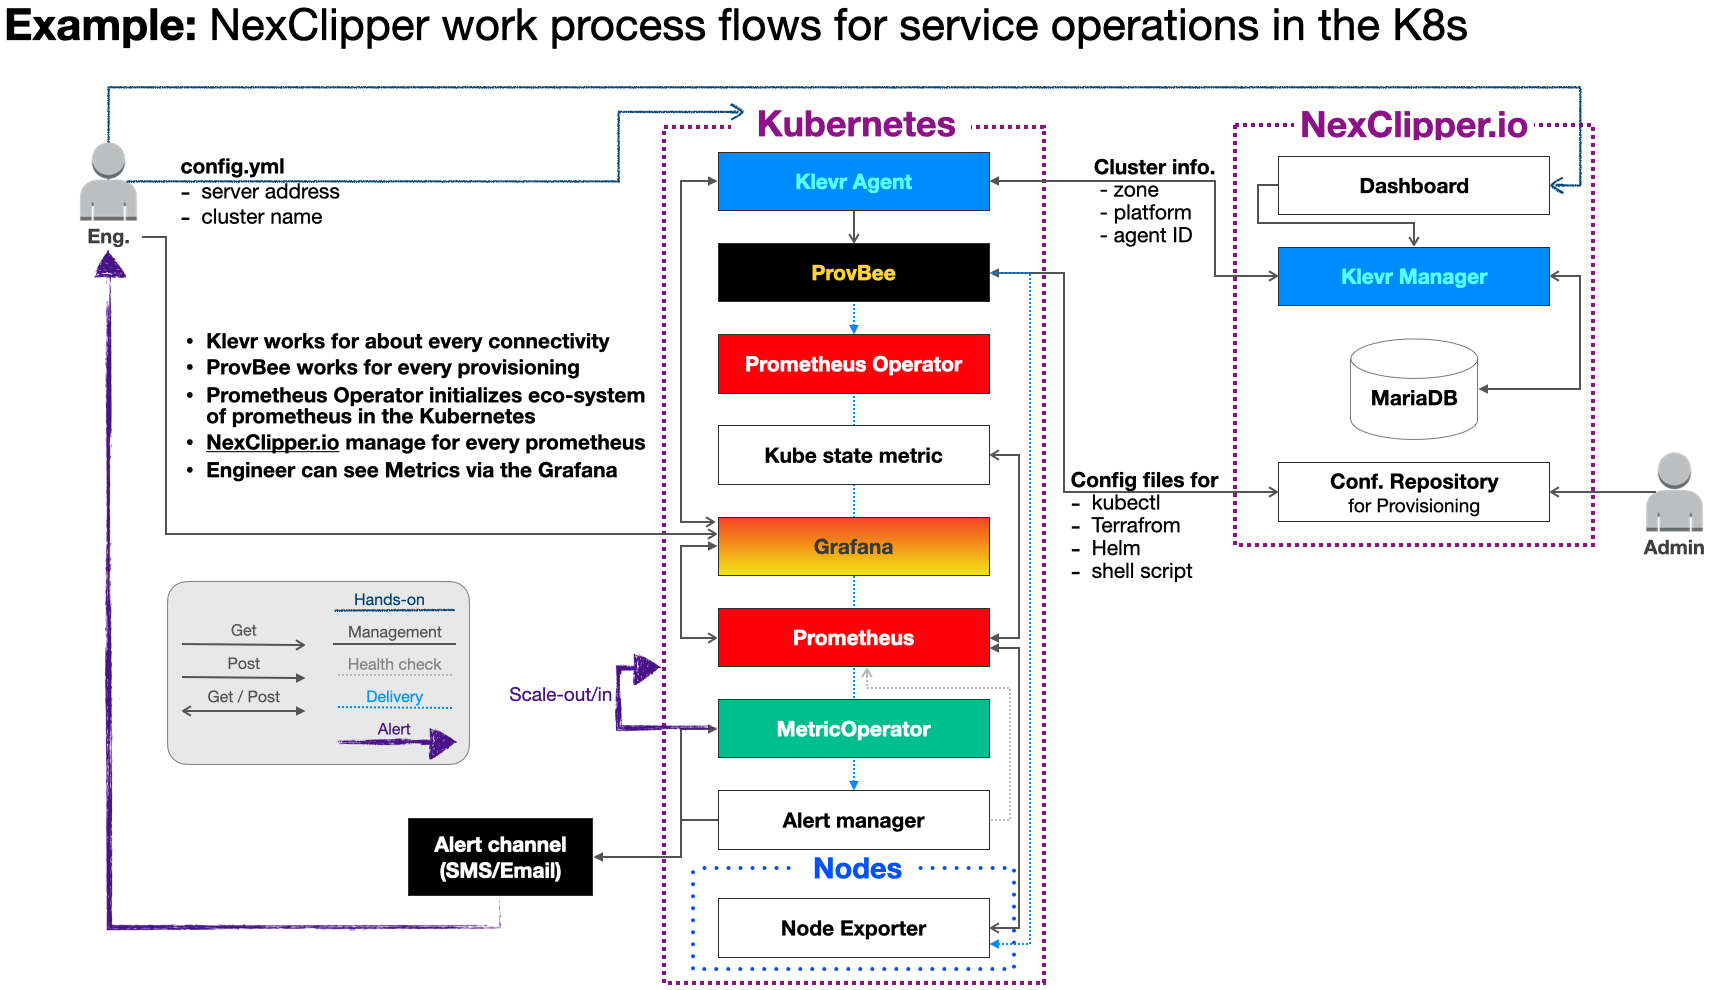 NexClipper_work_process_flows.png